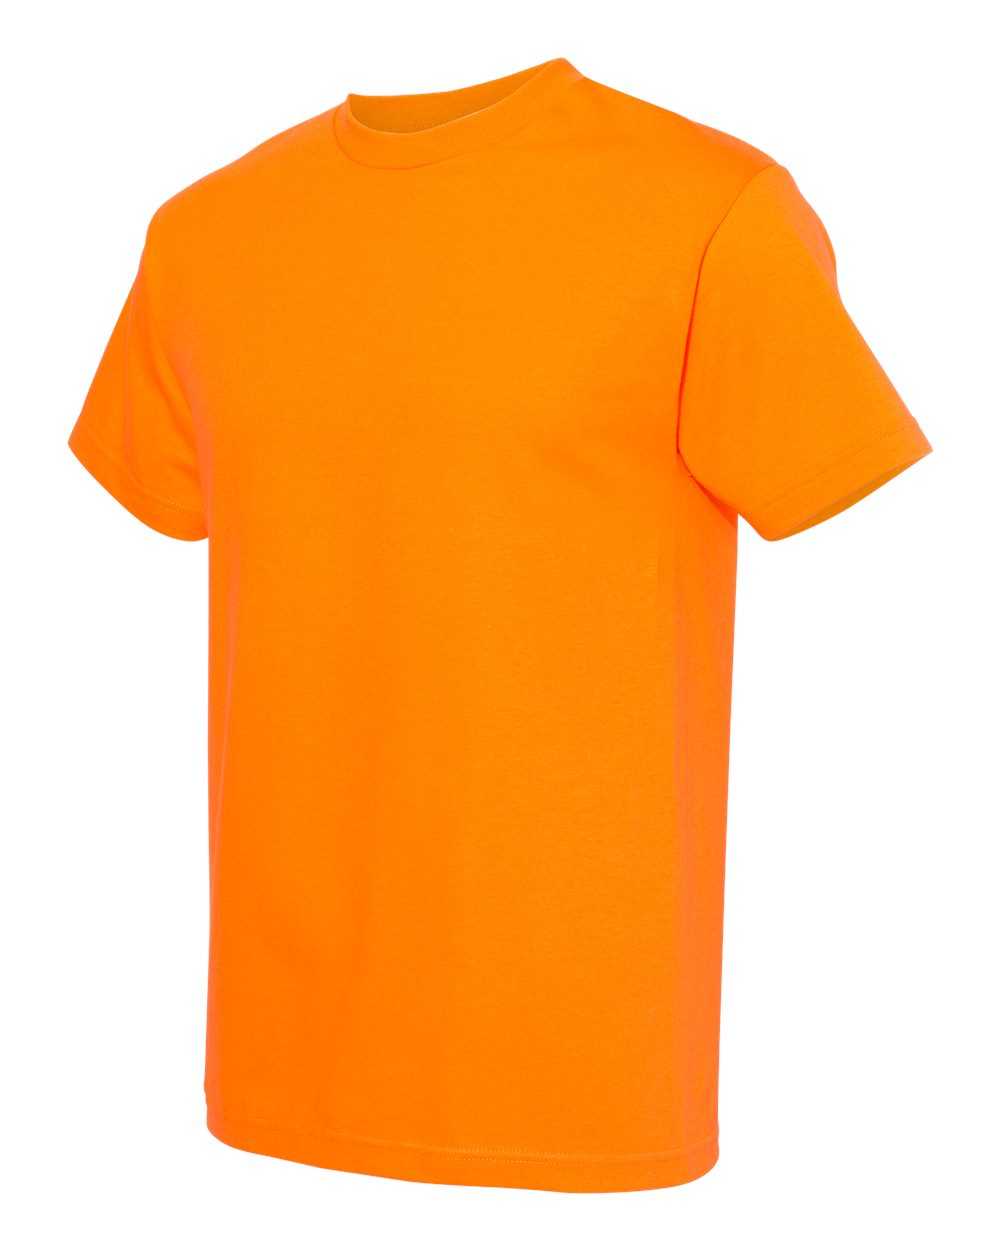 American Apparel 1301 Unisex Heavyweight Cotton T-Shirt - Orange - HIT a Double